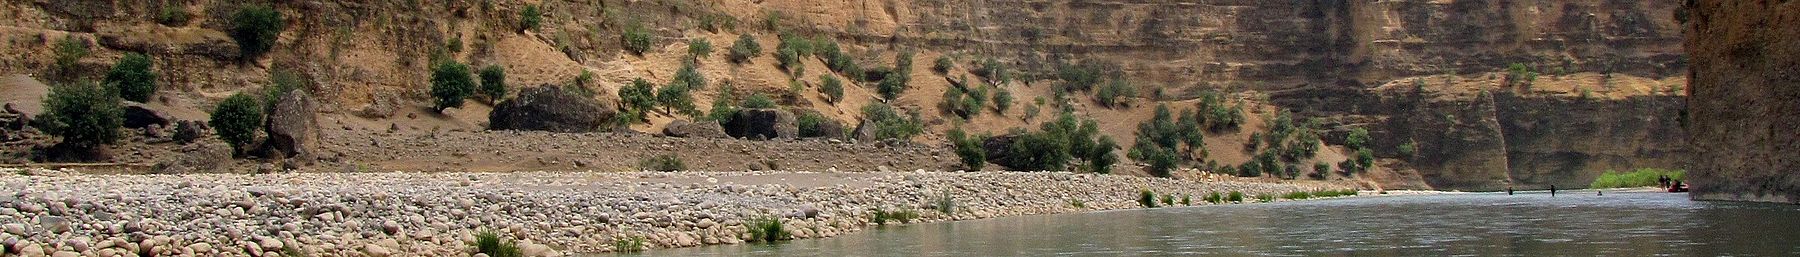 WV banner Chaharmahal and Bakhtiari province Armand River.jpg